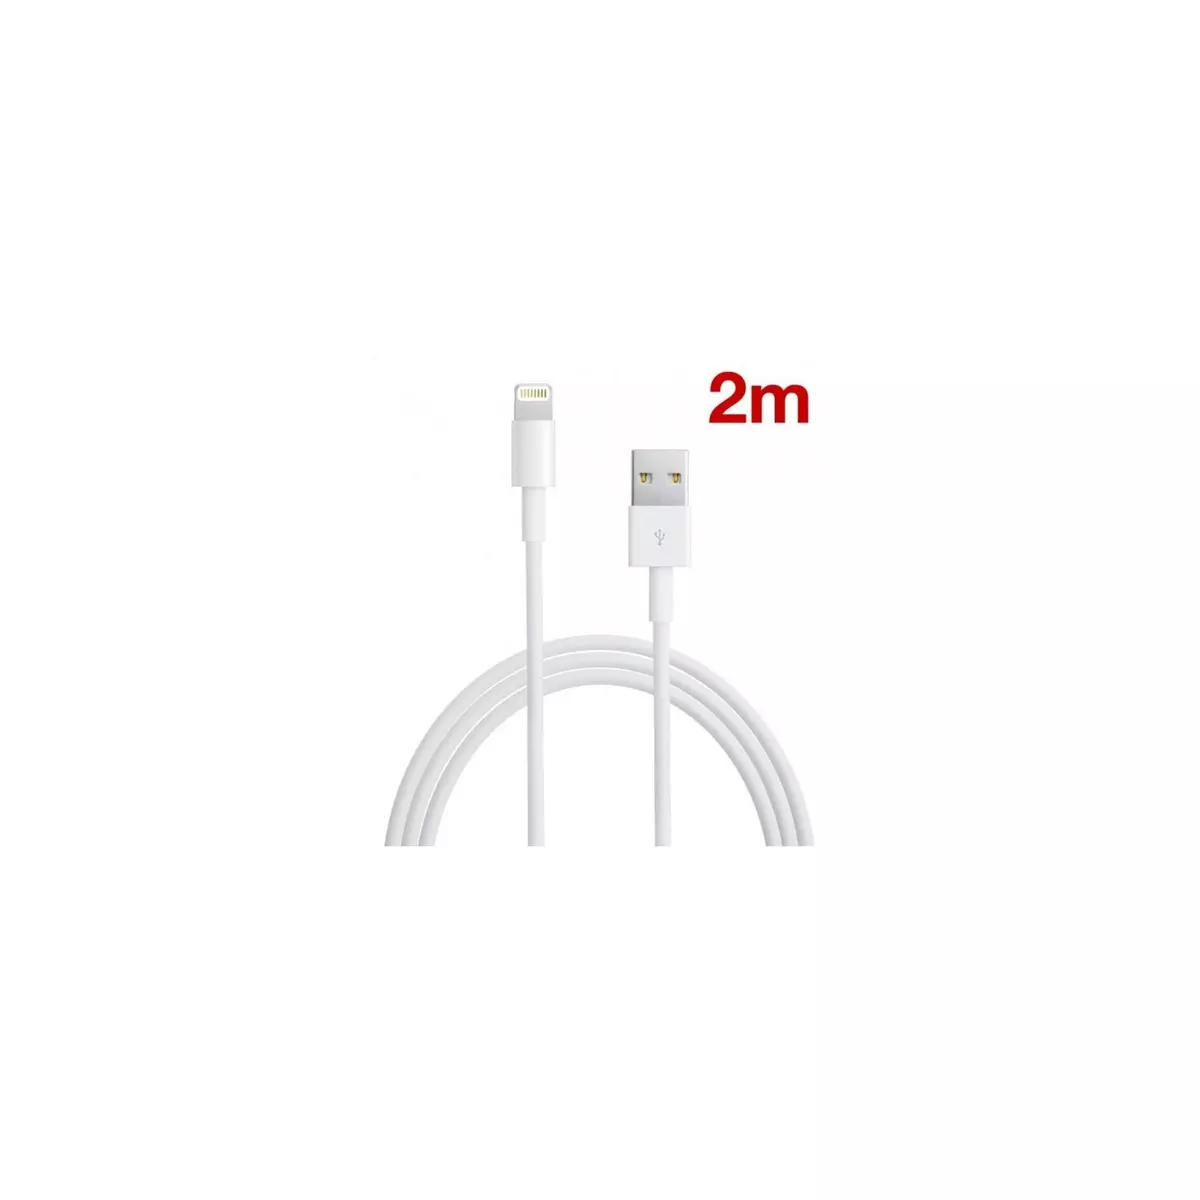  Câble Lightning 2 mètres pour iPhone 8/ 8 Plus origine Apple